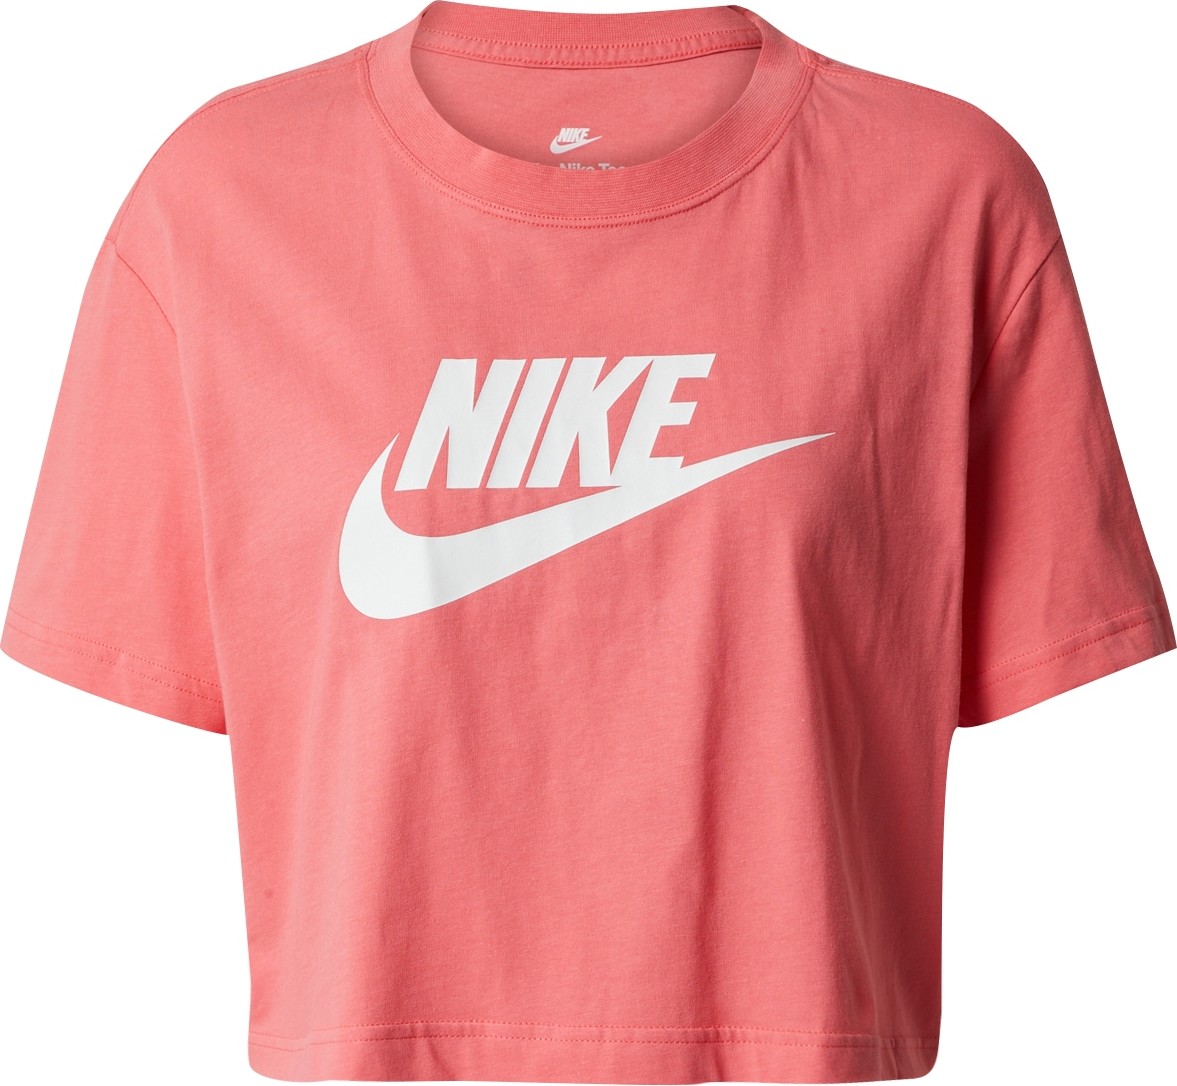 Tričko Nike Sportswear lososová / bílá